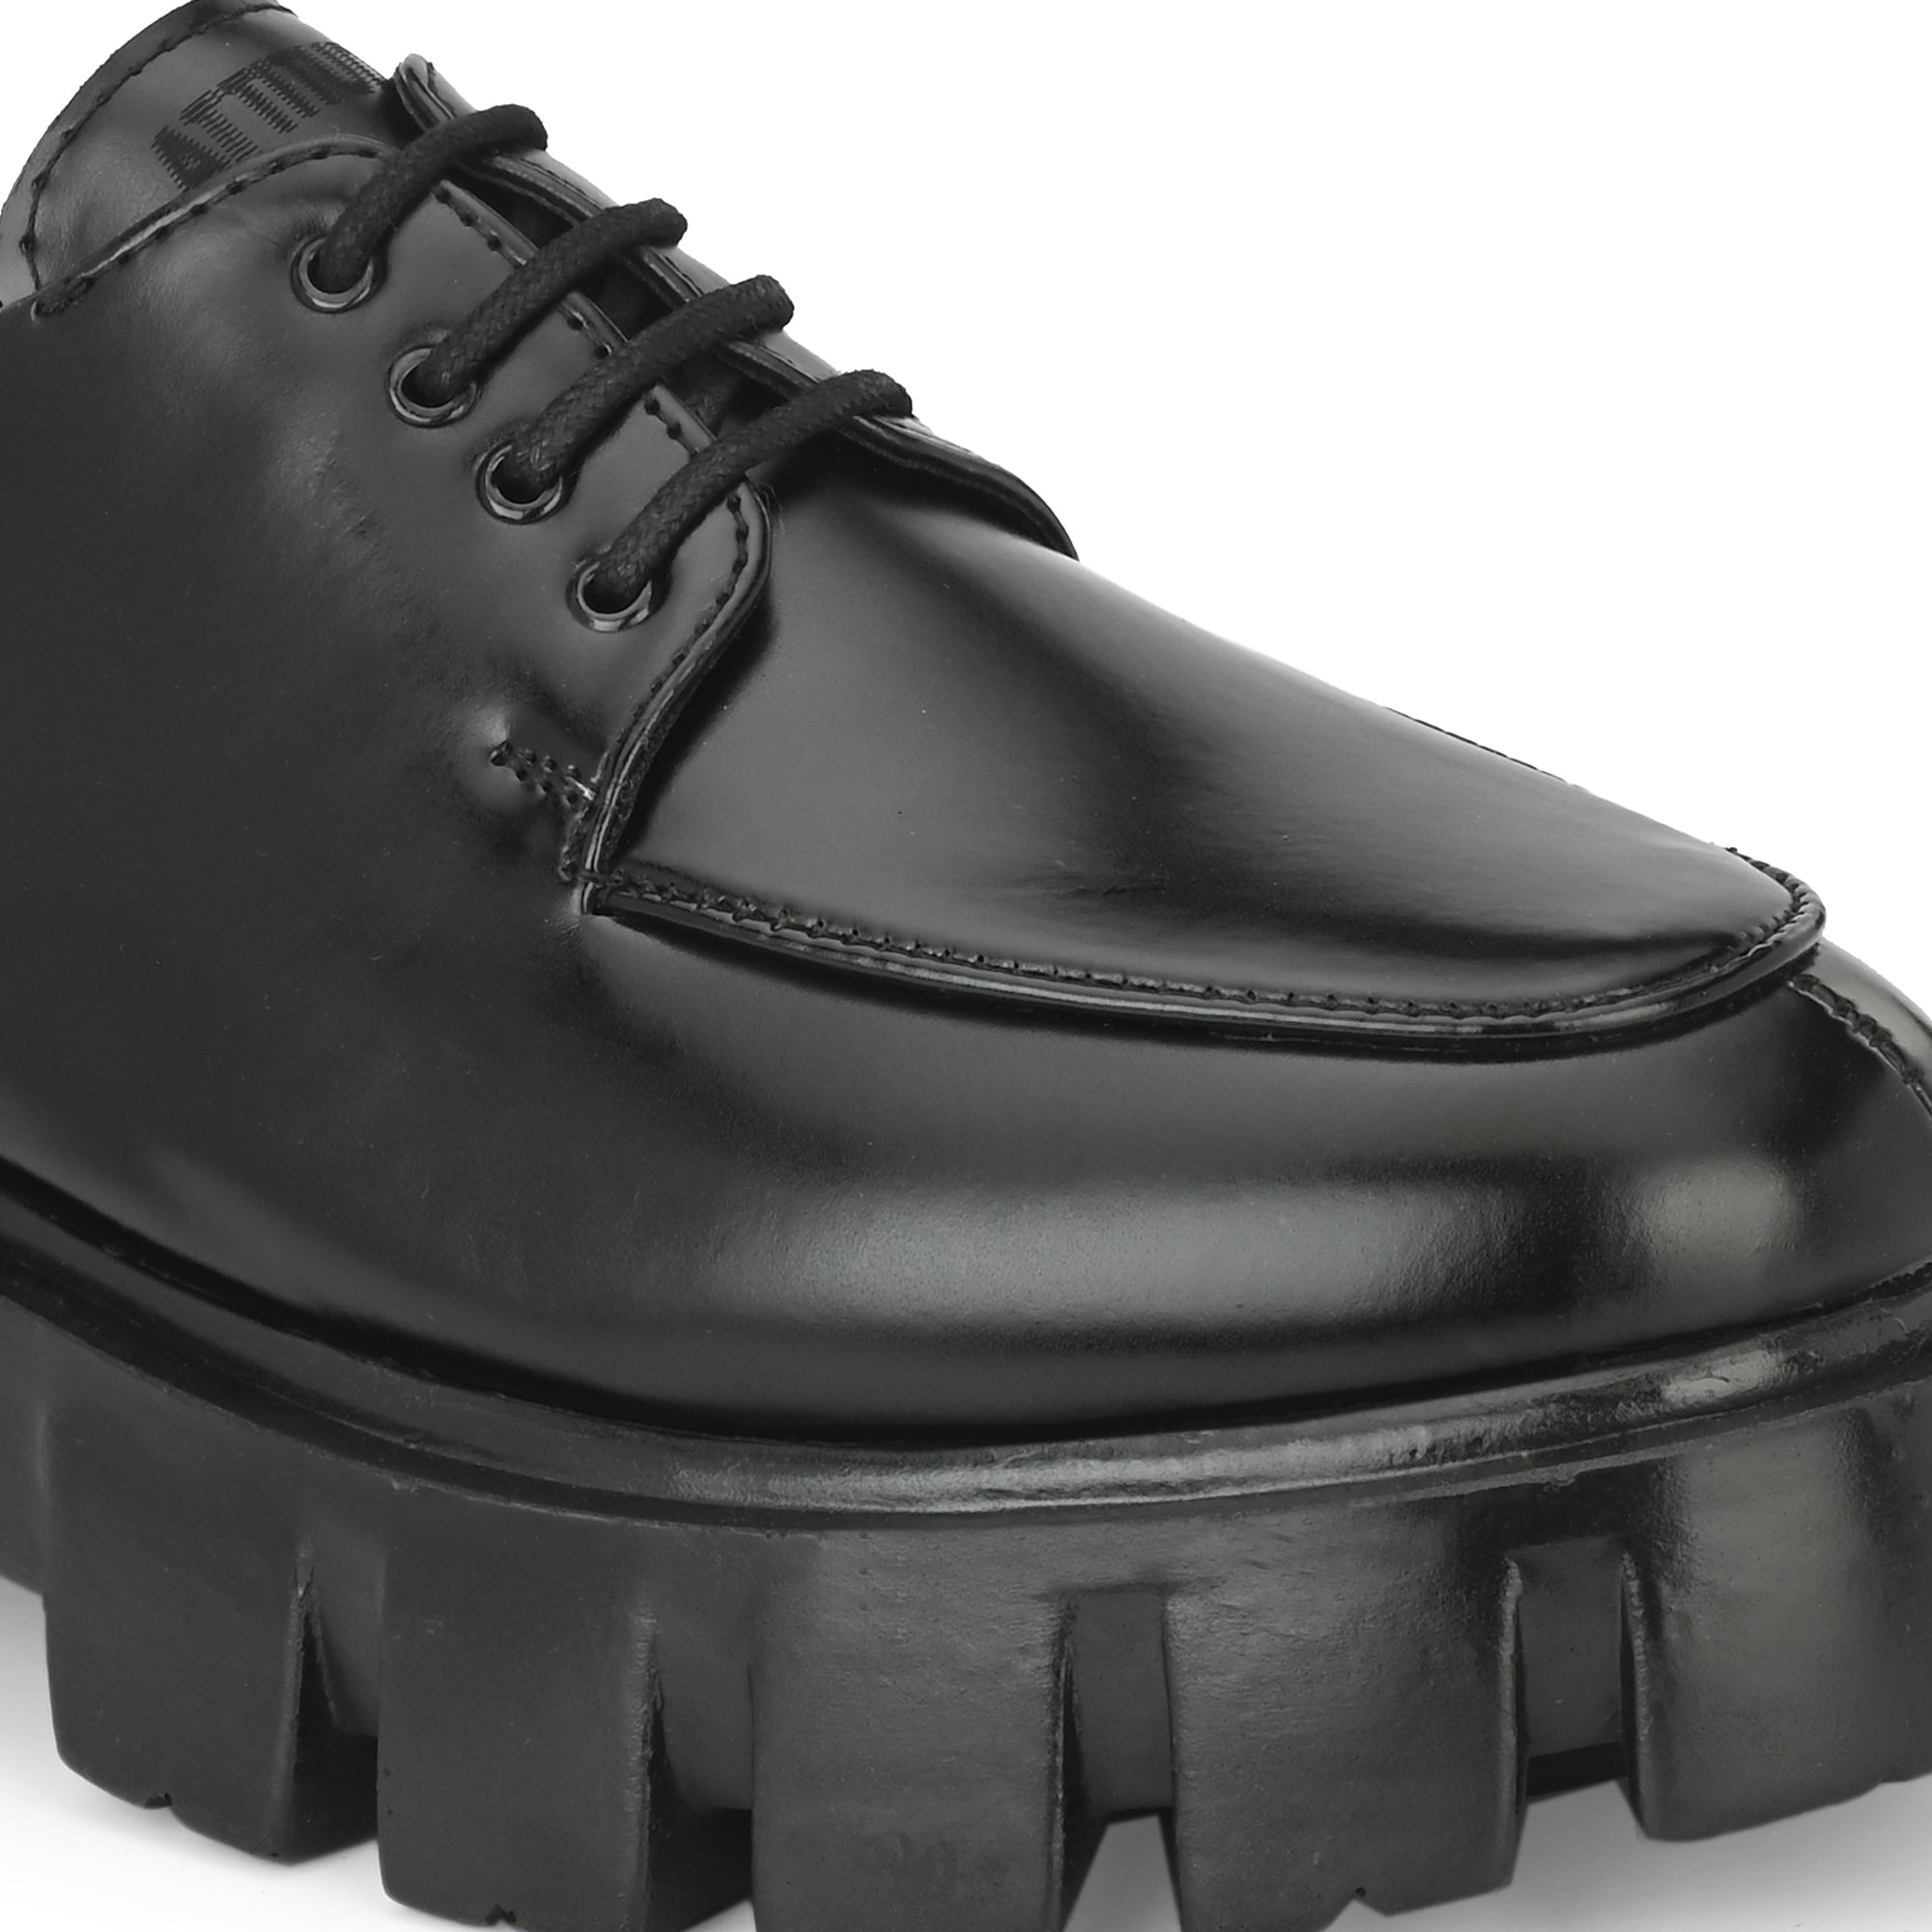 Designer Stylish Black High Heels Shoes Stock Photo 1686647968 |  Shutterstock